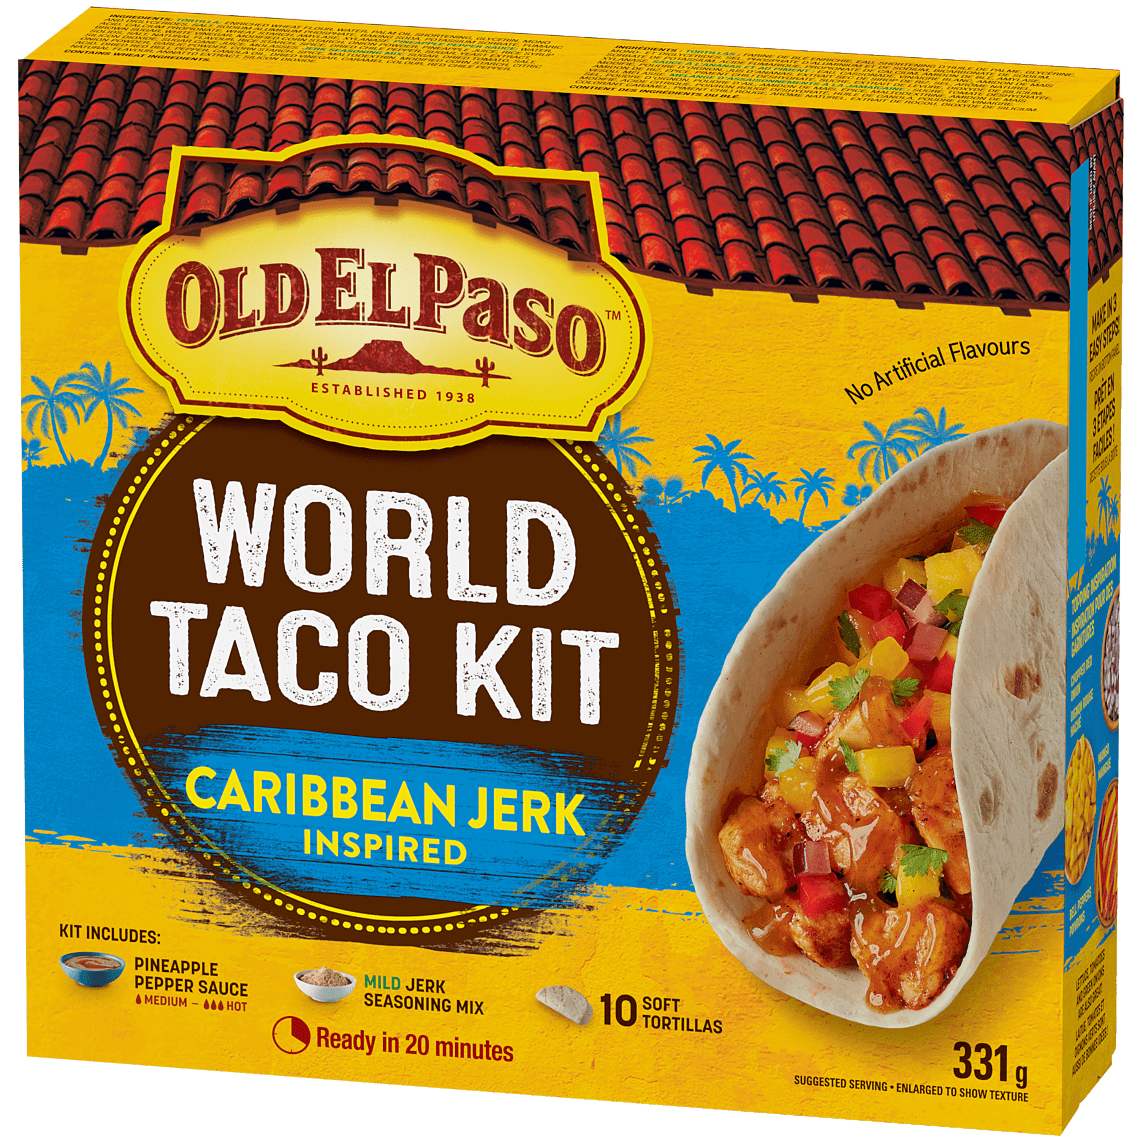 World Taco Kit - Caribbean Jerk